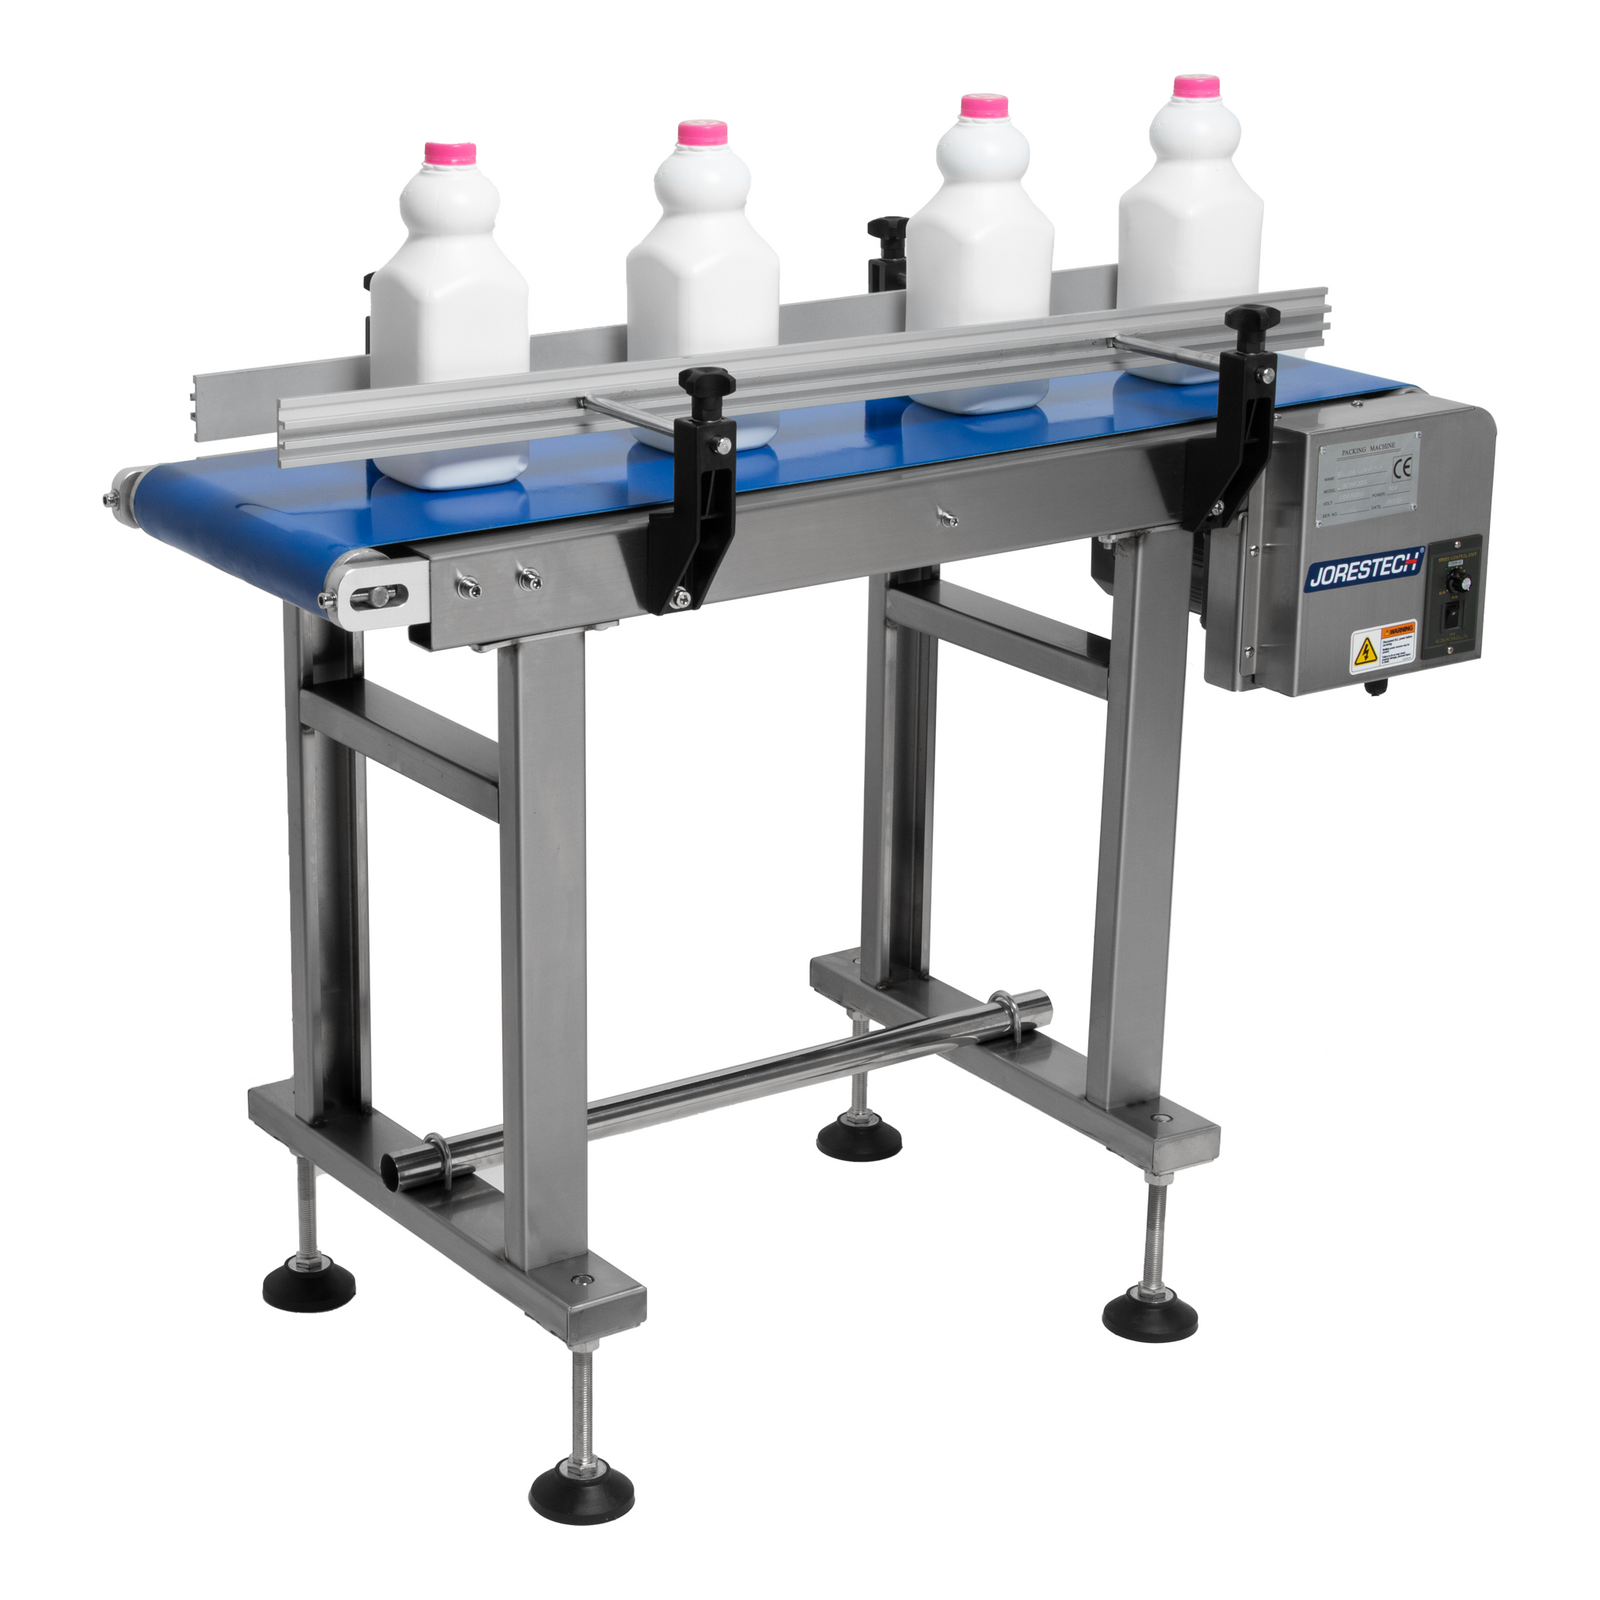 JORES TECHNOLOGIES® motorized conveyor with white milk bottles on blue belt